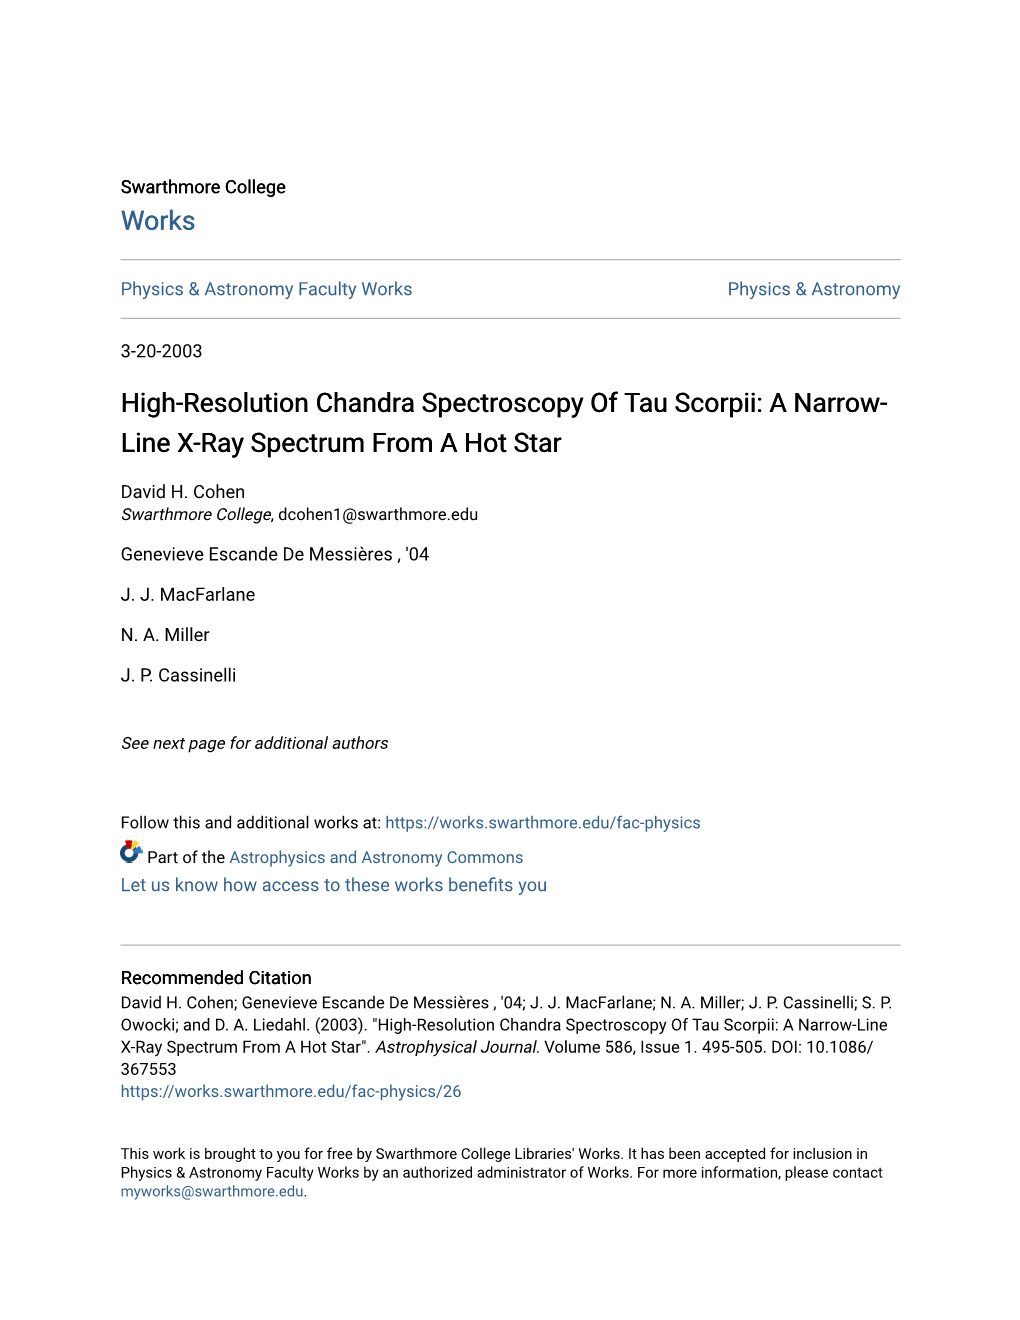 High-Resolution Chandra Spectroscopy of Tau Scorpii: a Narrow- Line X-Ray Spectrum from a Hot Star